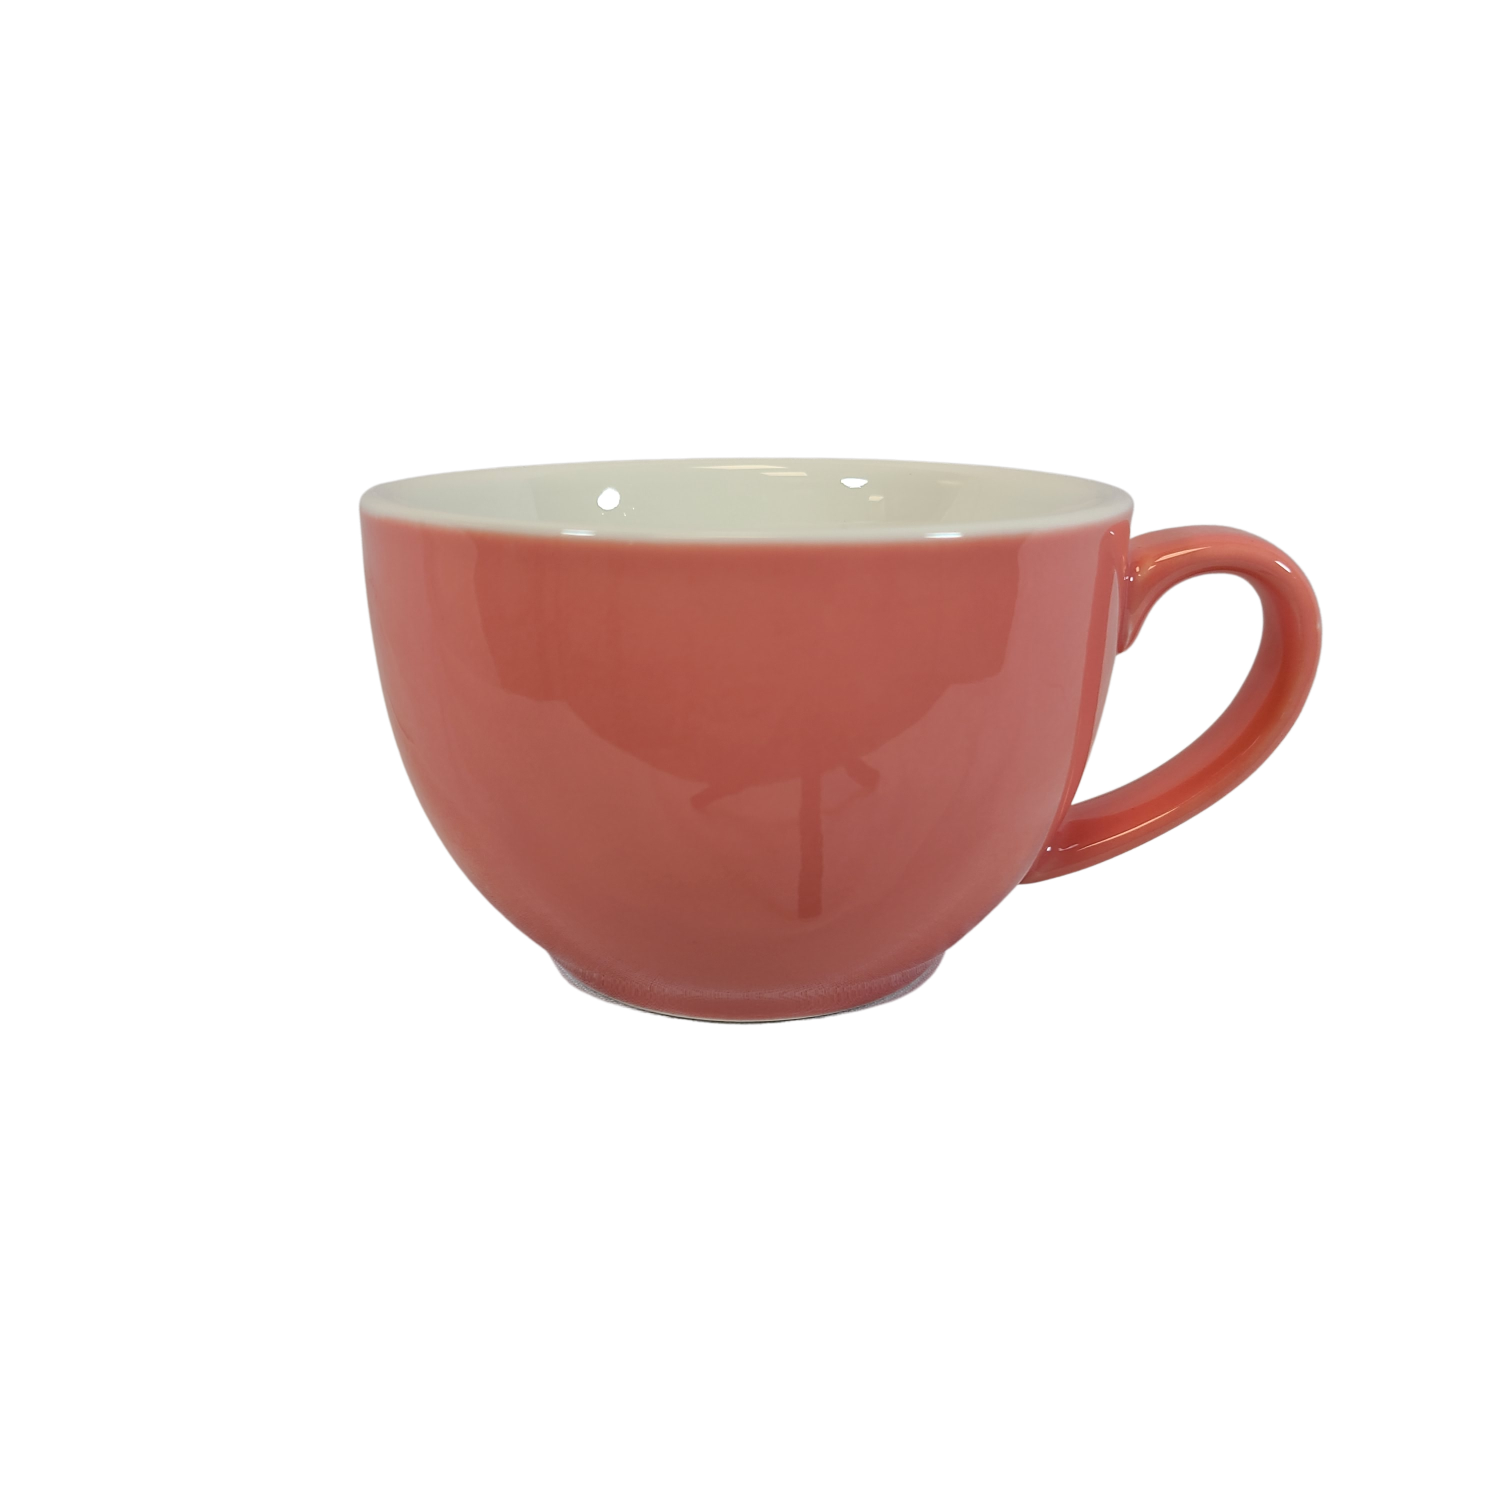 DISCOUNT PROMOS Custom Glossy Ceramic Latte Coffee Mug 12 oz.  Set of 10, Personalized Bulk Pack - Perfect for Tea, Espresso, Cappuccino,  Hot Cocoa - White: Coffee Cups & Mugs